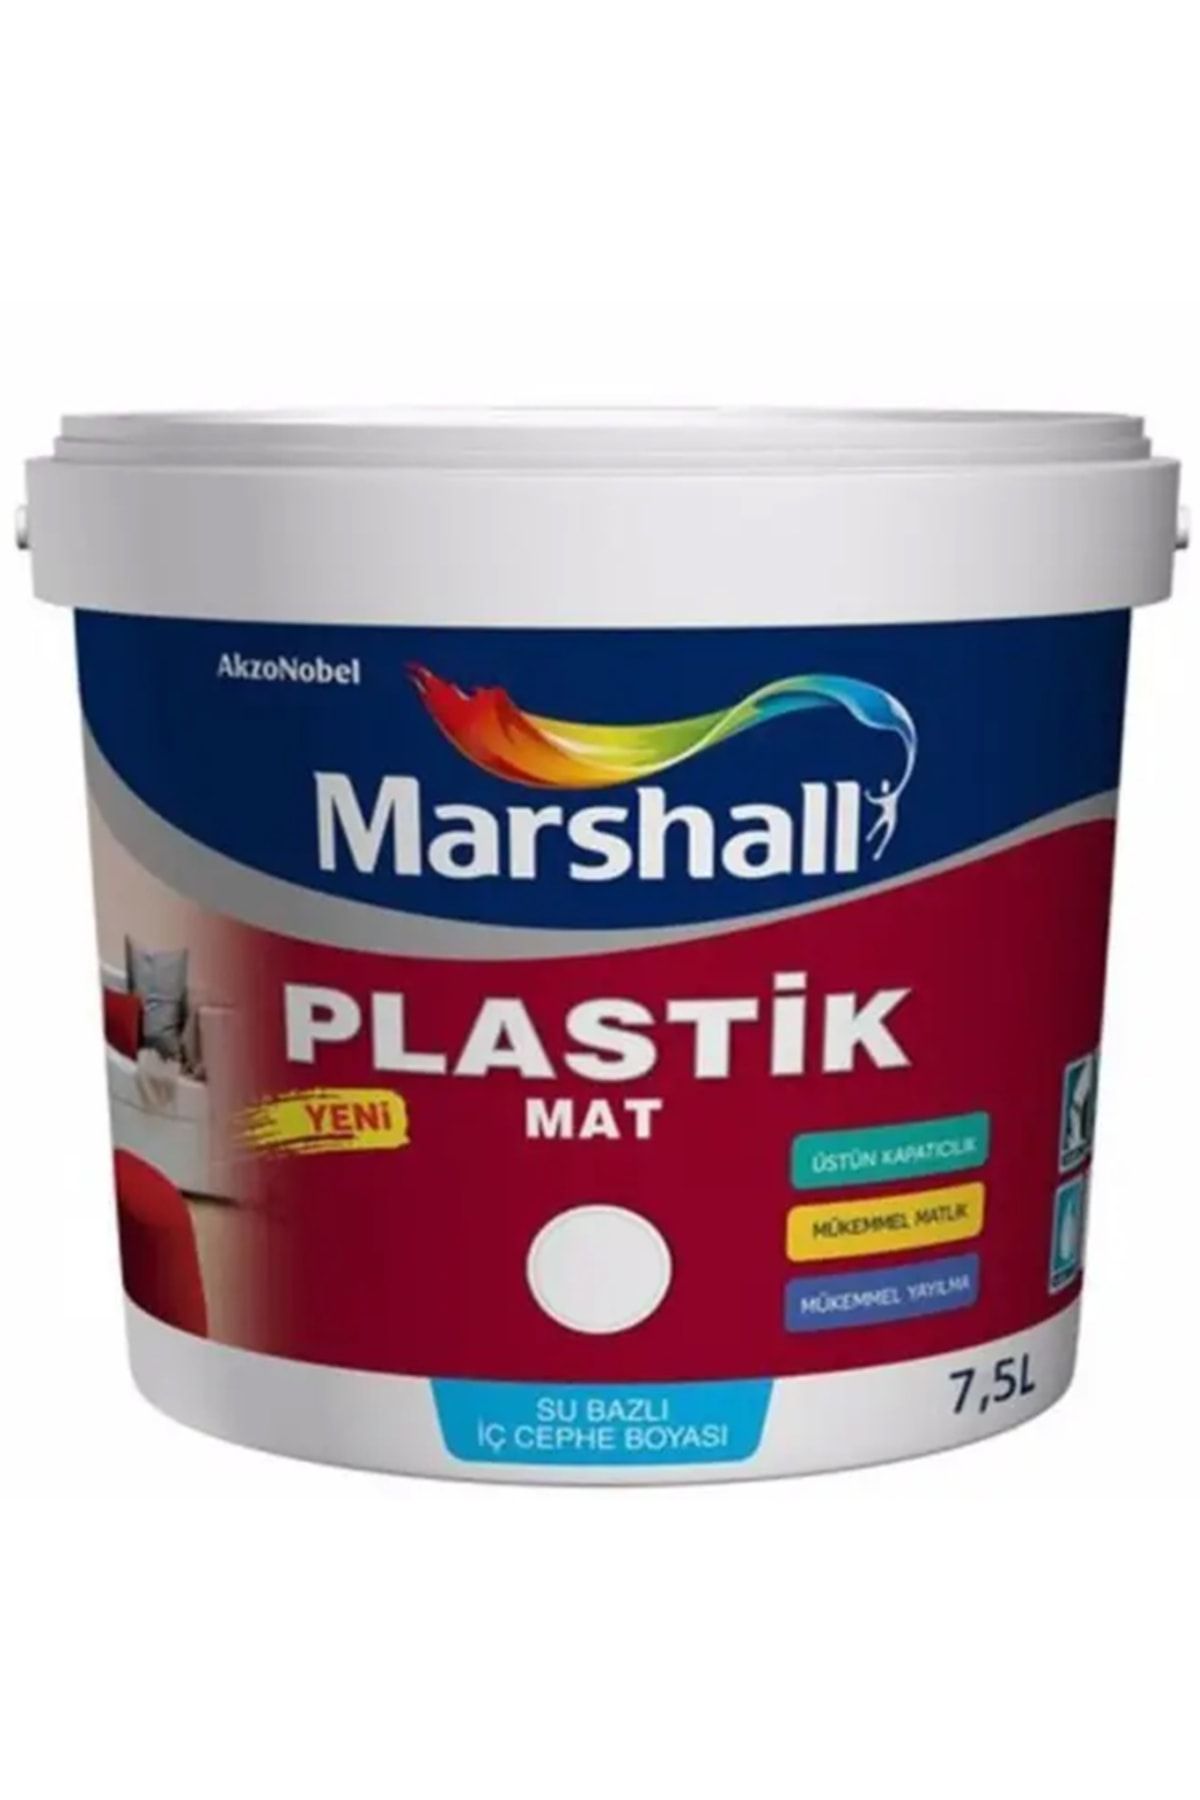 Marshall Plastik Mat Silinebilir Iç Cephe Boyası Lila 7,5 Lt (10 Kg)